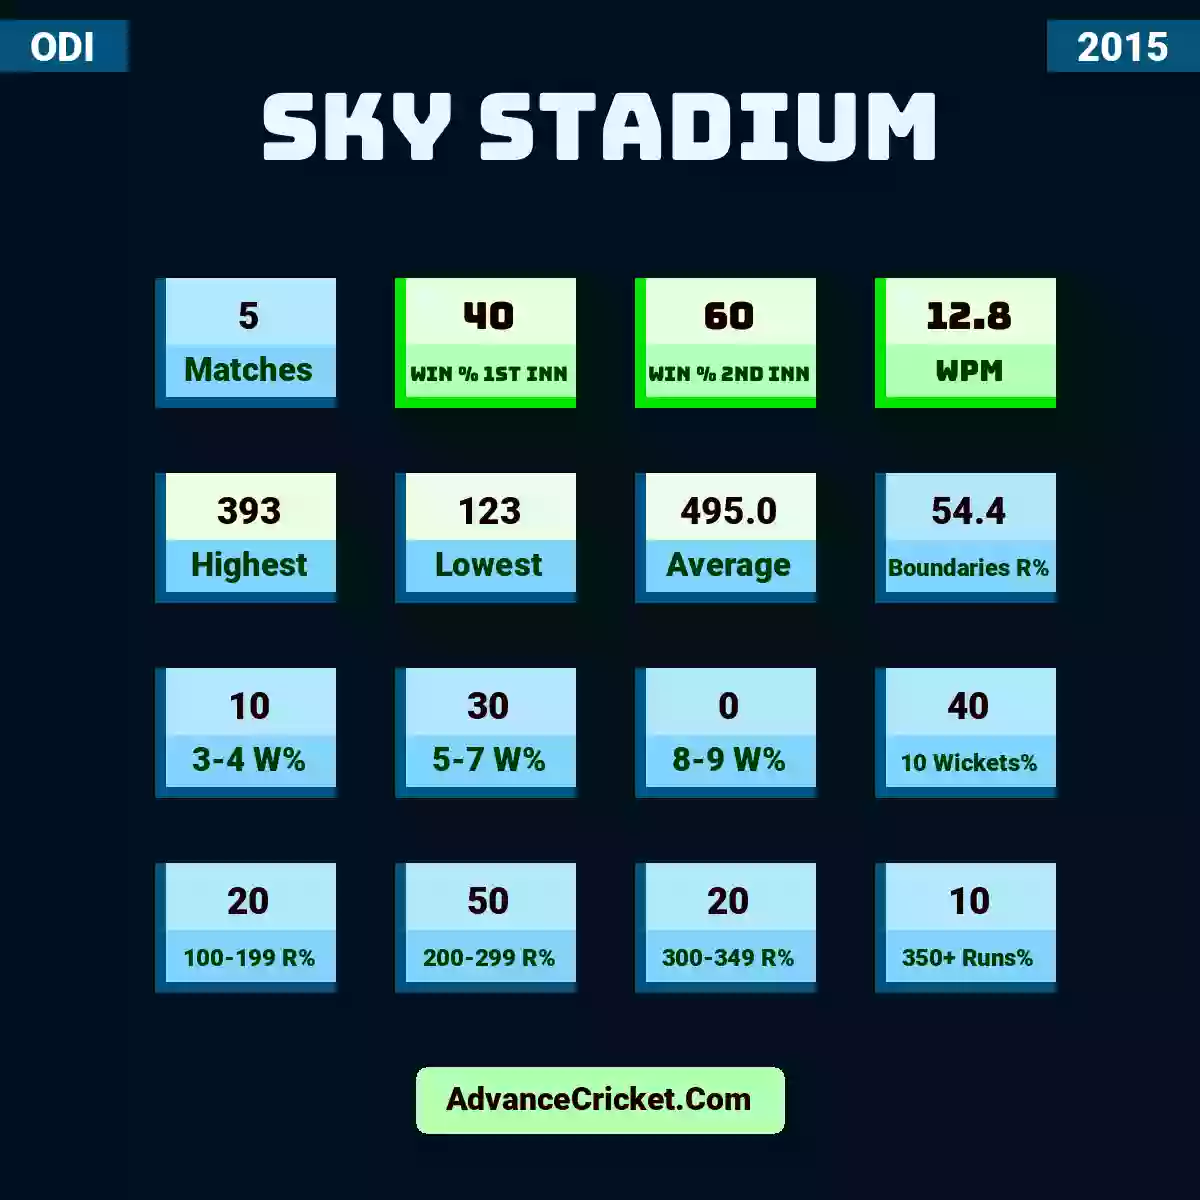 Image showing Sky Stadium with Matches: 5, Win % 1st Inn: 40, Win % 2nd Inn: 60, WPM: 12.8, Highest: 393, Lowest: 123, Average: 495.0, Boundaries R%: 54.4, 3-4 W%: 10, 5-7 W%: 30, 8-9 W%: 0, 10 Wickets%: 40, 100-199 R%: 20, 200-299 R%: 50, 300-349 R%: 20, 350+ Runs%: 10.